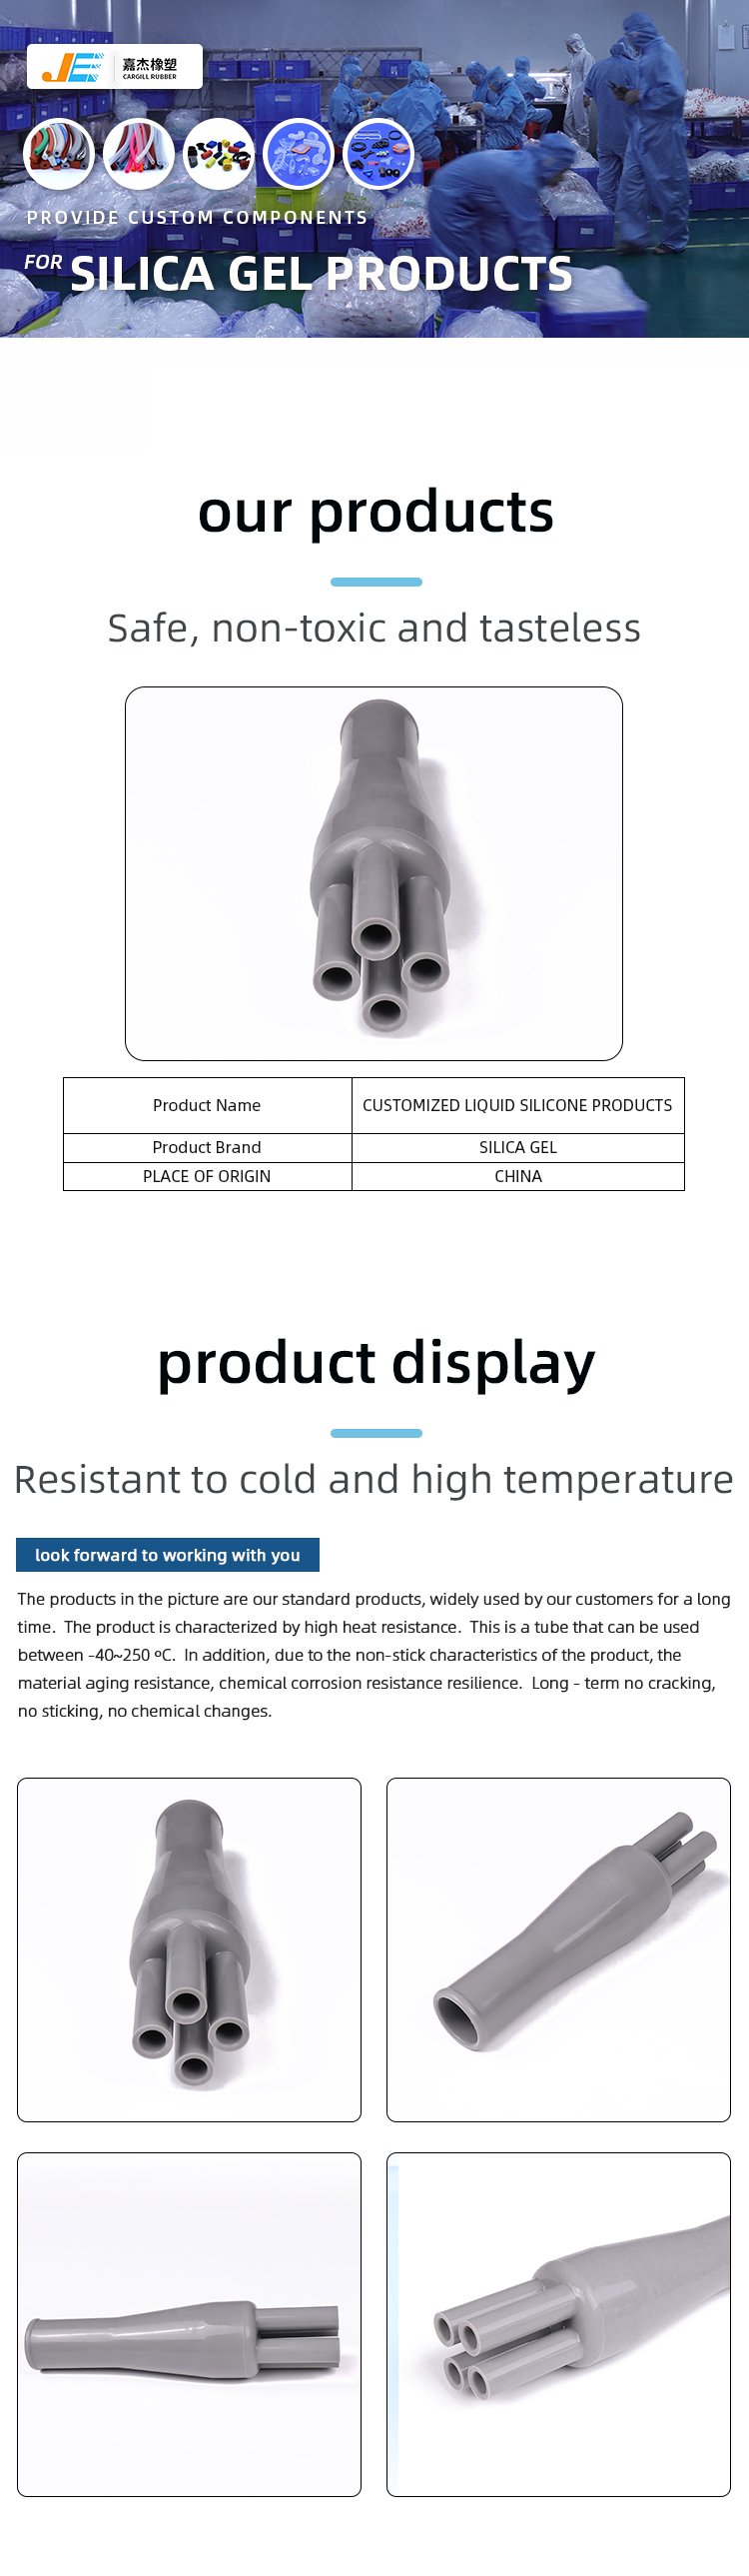 Custom Liquid Silicone Products